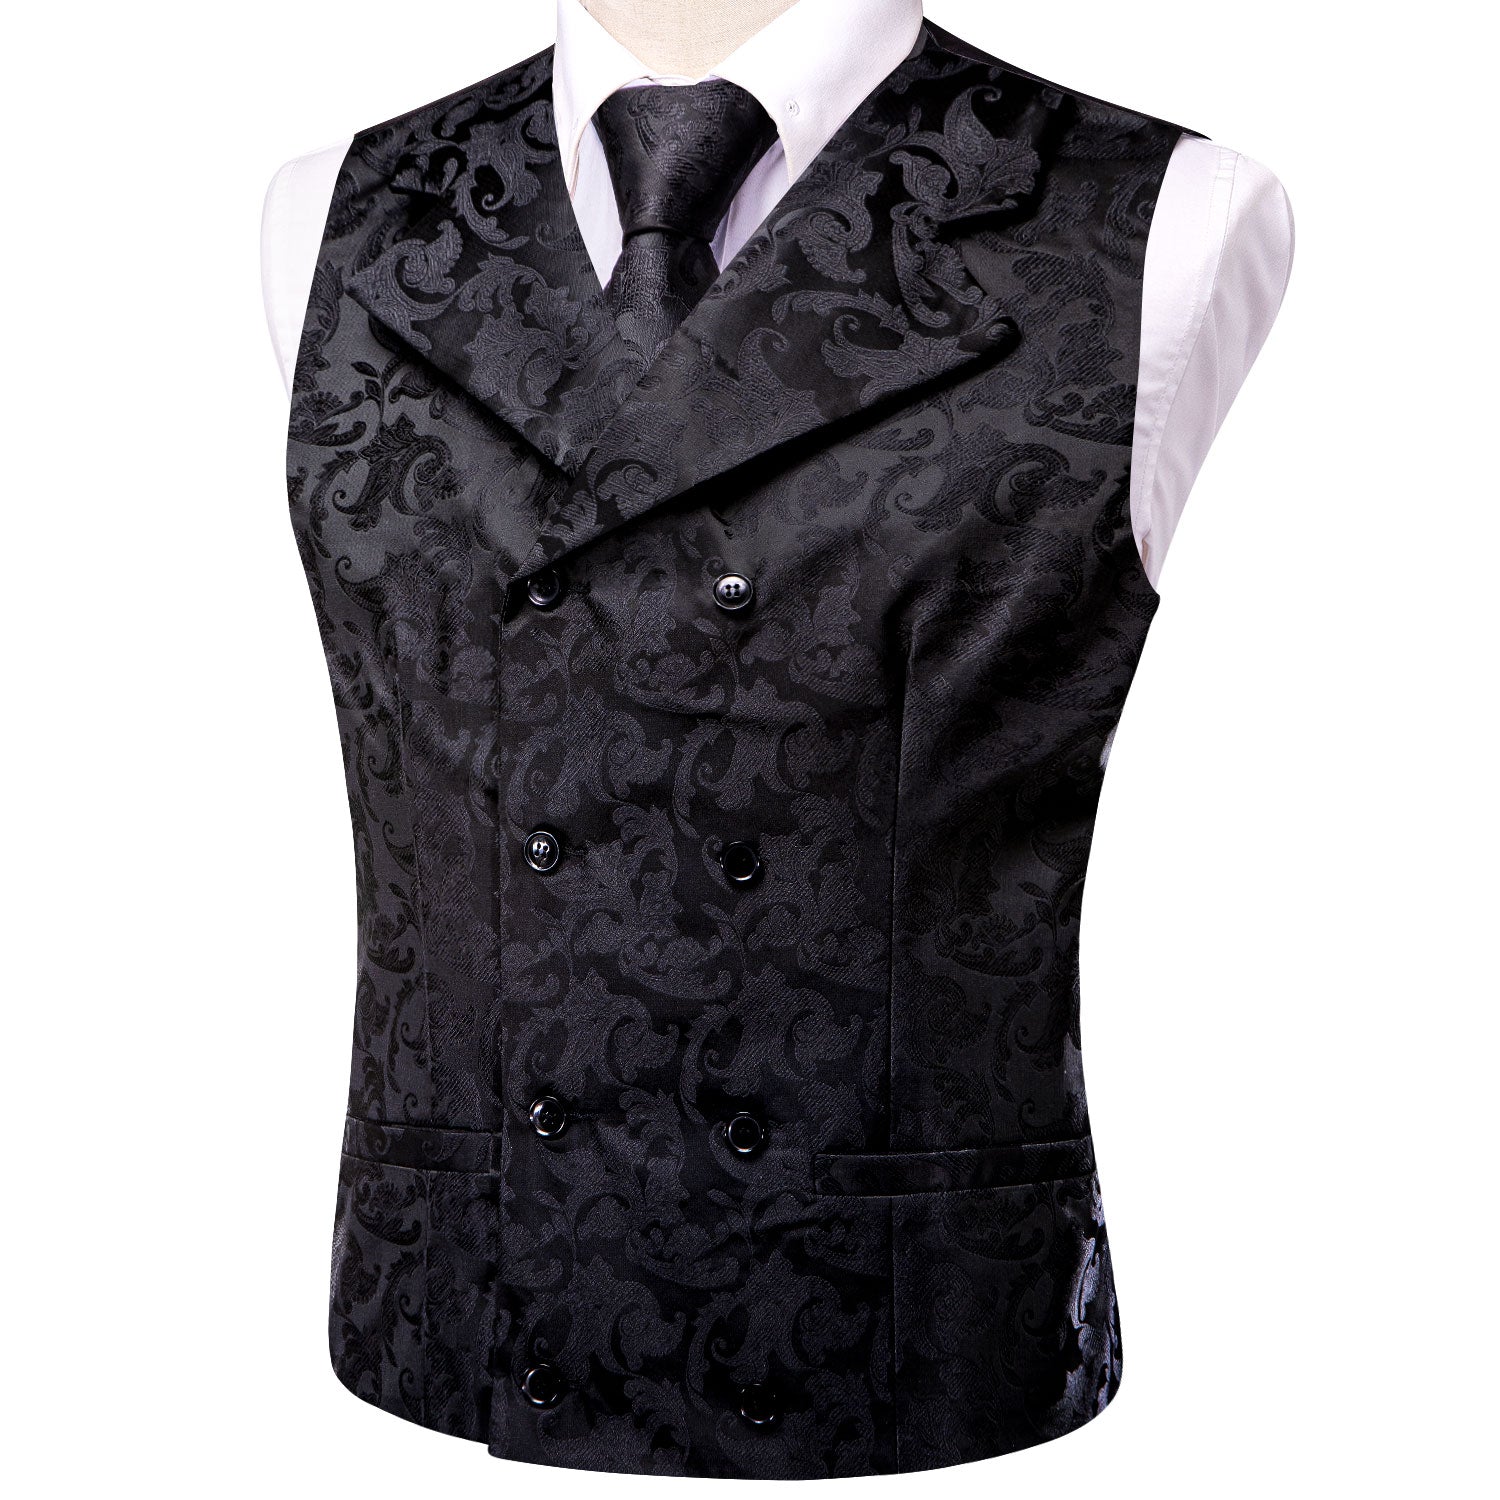 Double Breasted Waistcoat Black Paisley Vest Hanky Cufflinks Tie Set